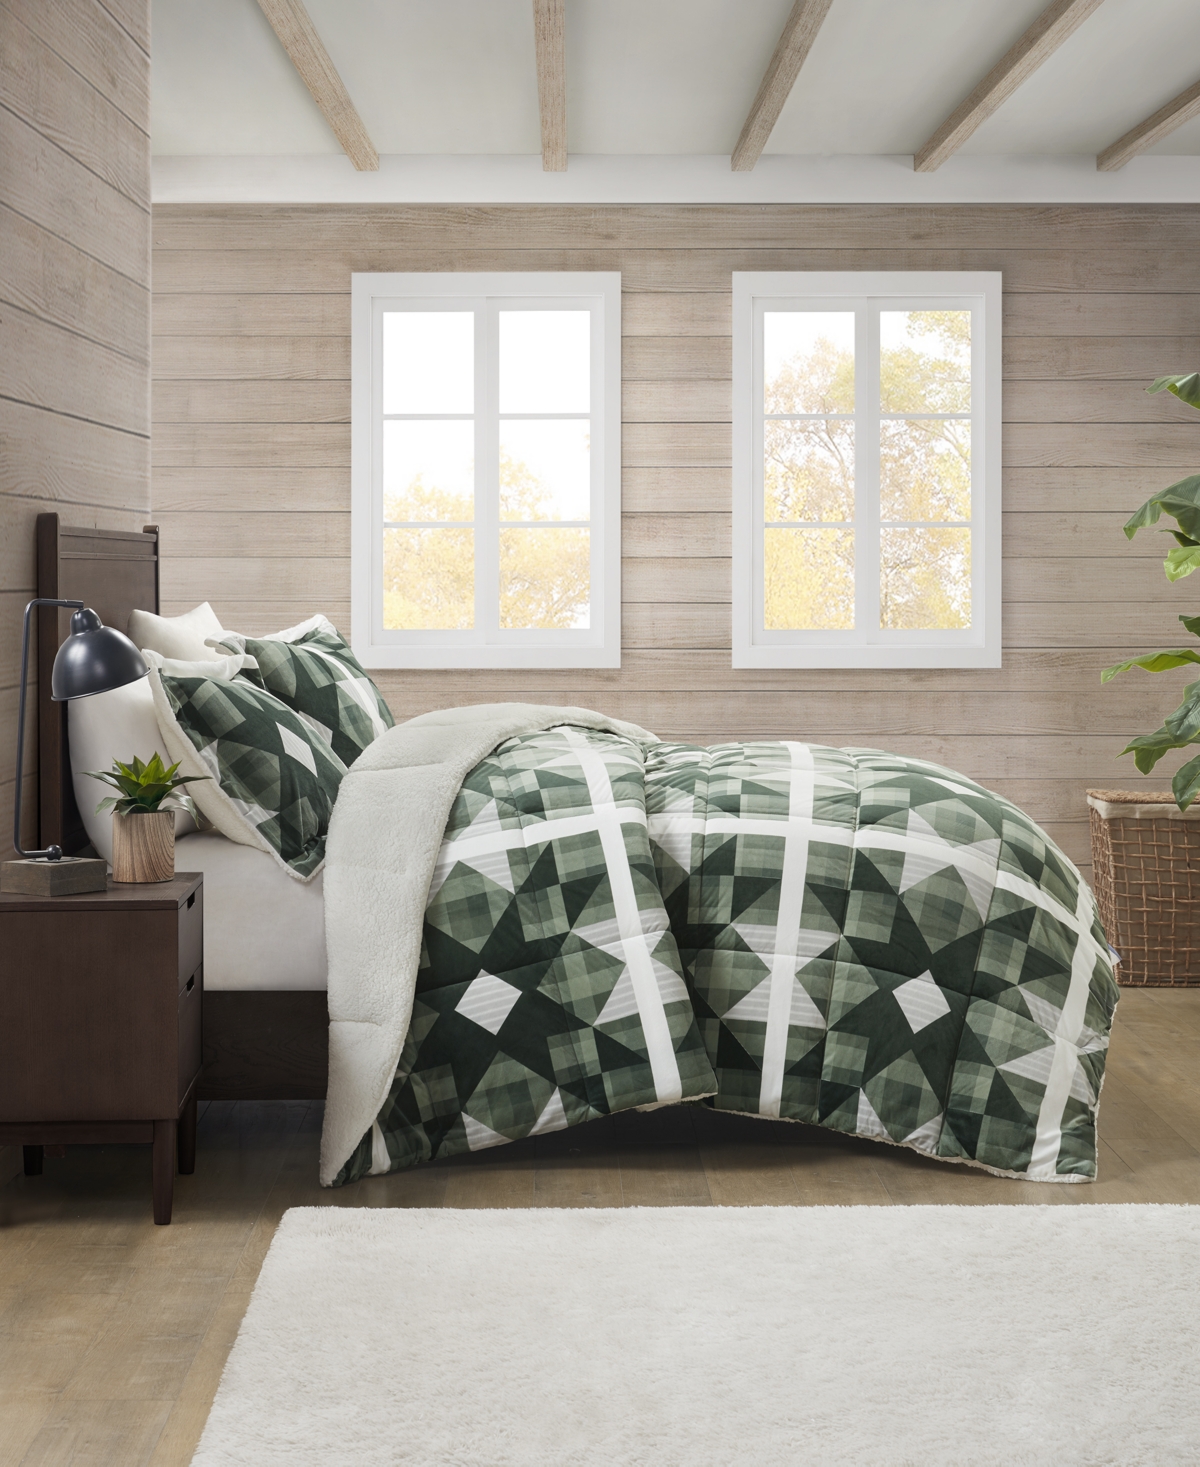 Premier Comfort Reversible Velvet To Sherpa Comforter Set, Full/queen In Green Starburst